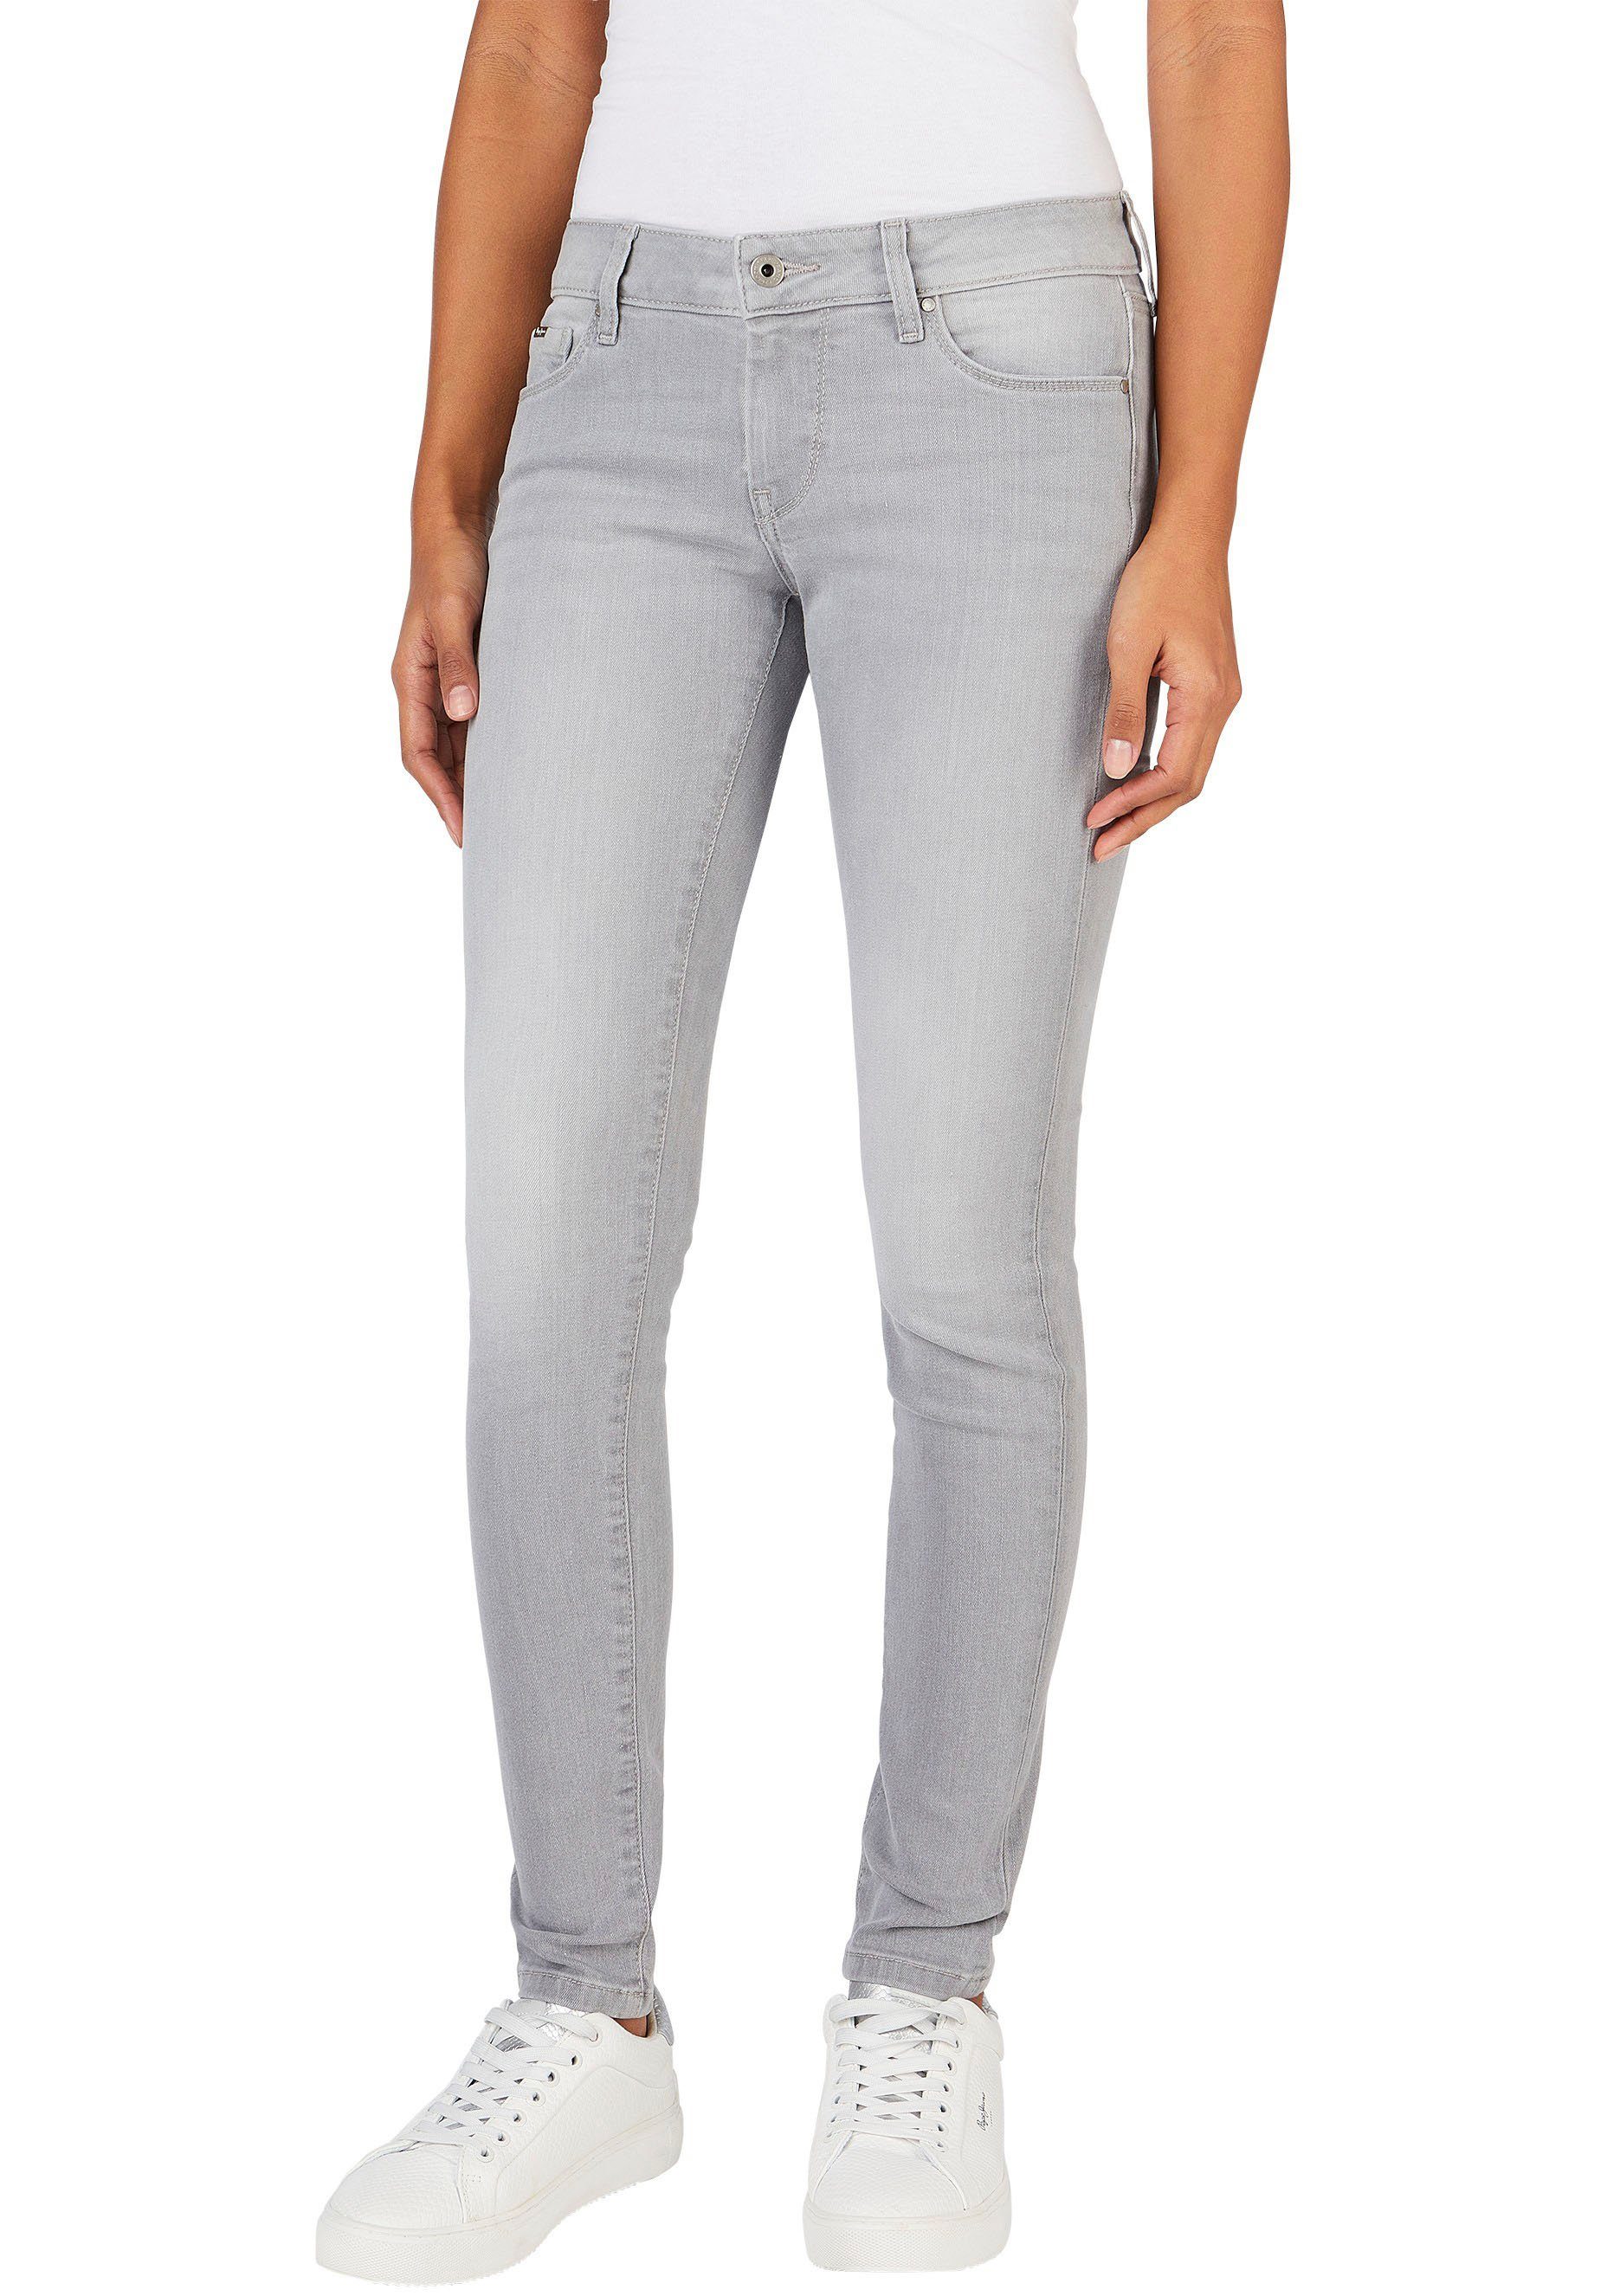 light im Jeans Bund grey mit und 5-Pocket-Stil SOHO Skinny-fit-Jeans Stretch-Anteil 1-Knopf Pepe